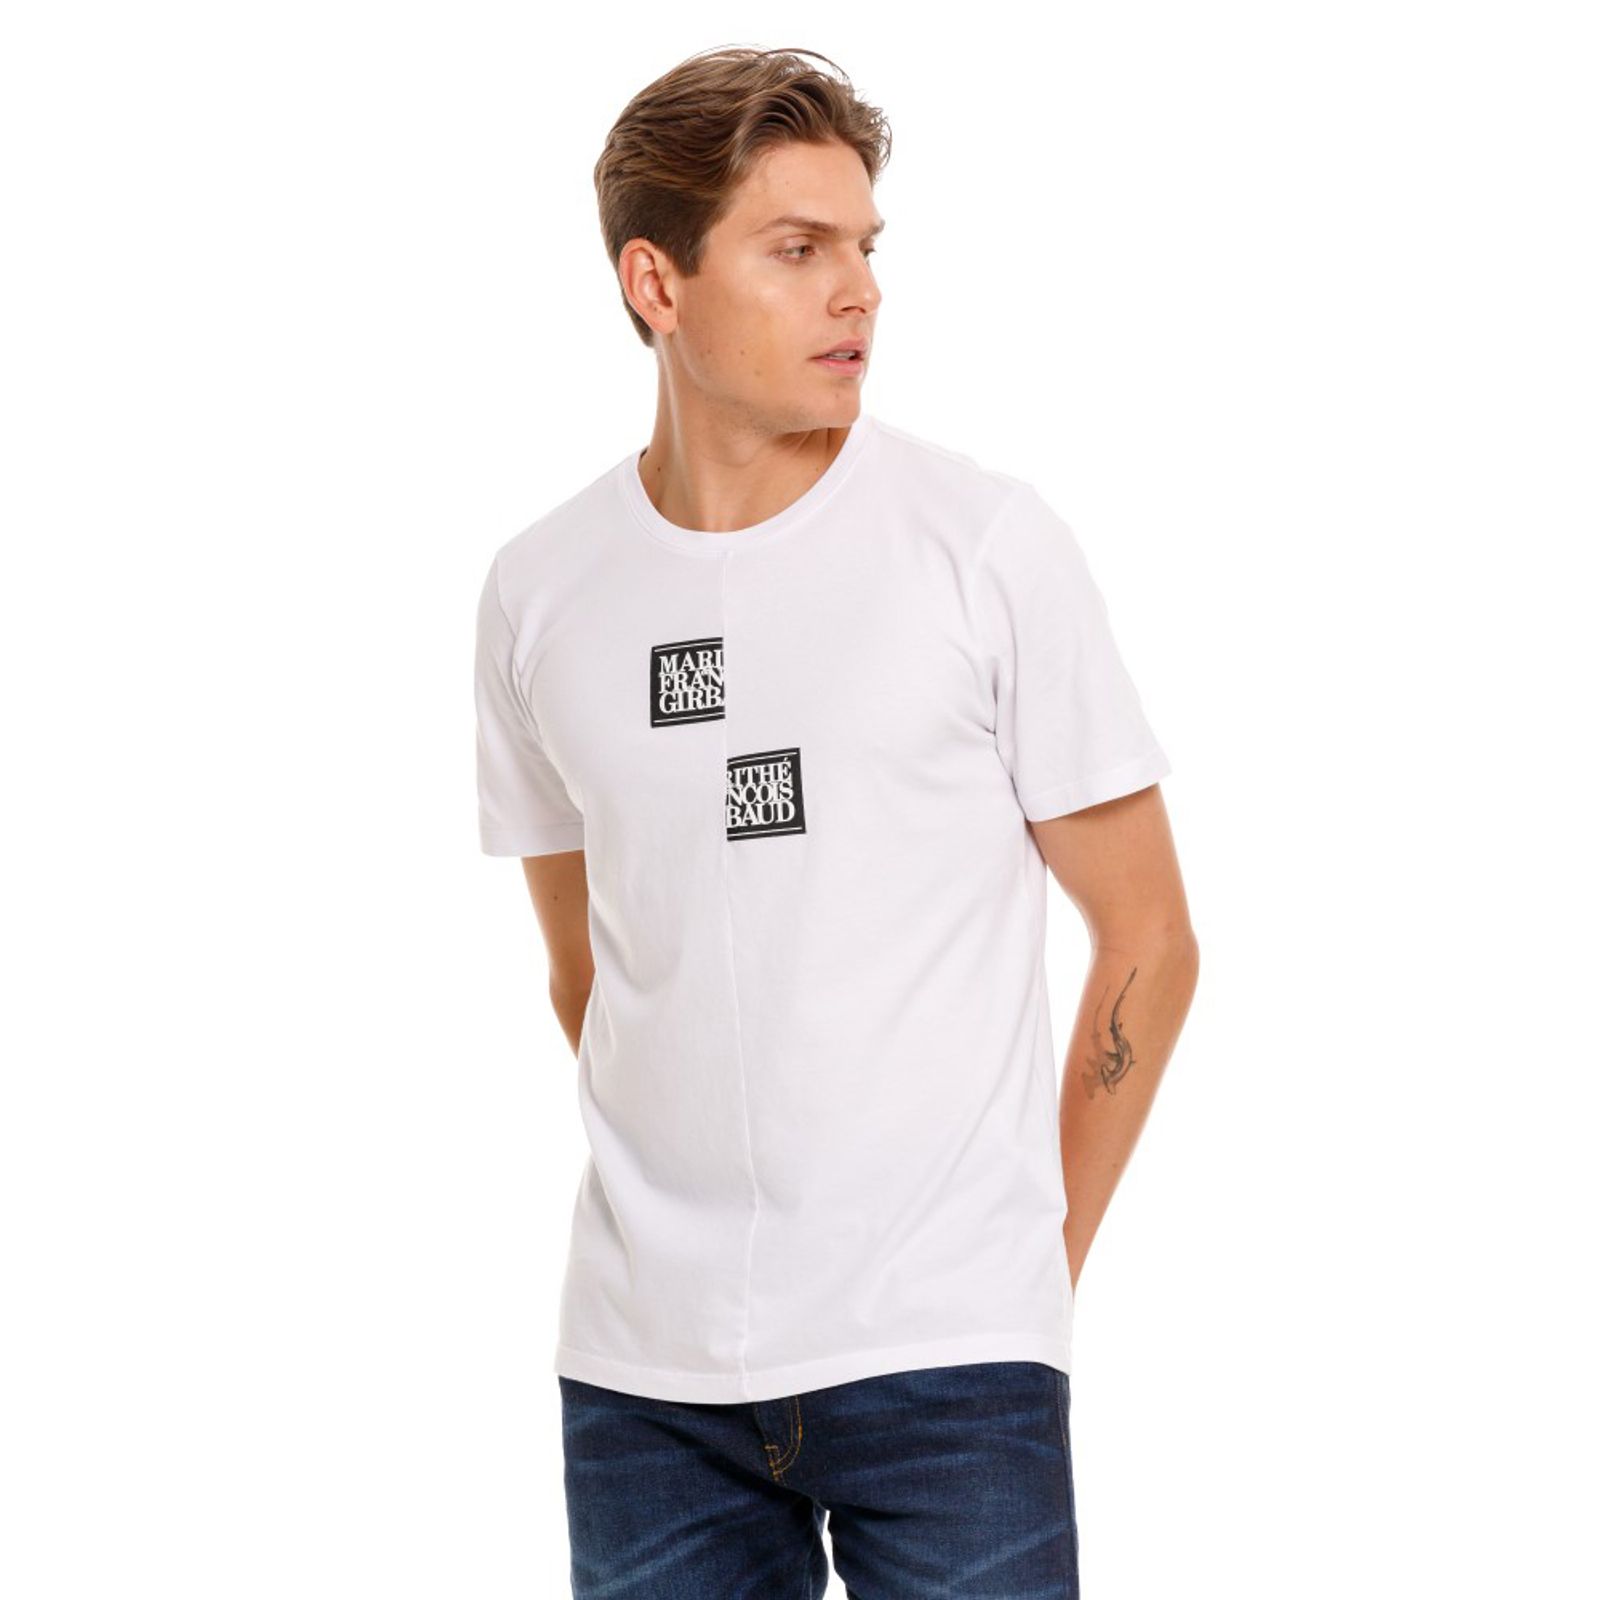 Camiseta Manga Corta Para Hombre Le-Francois